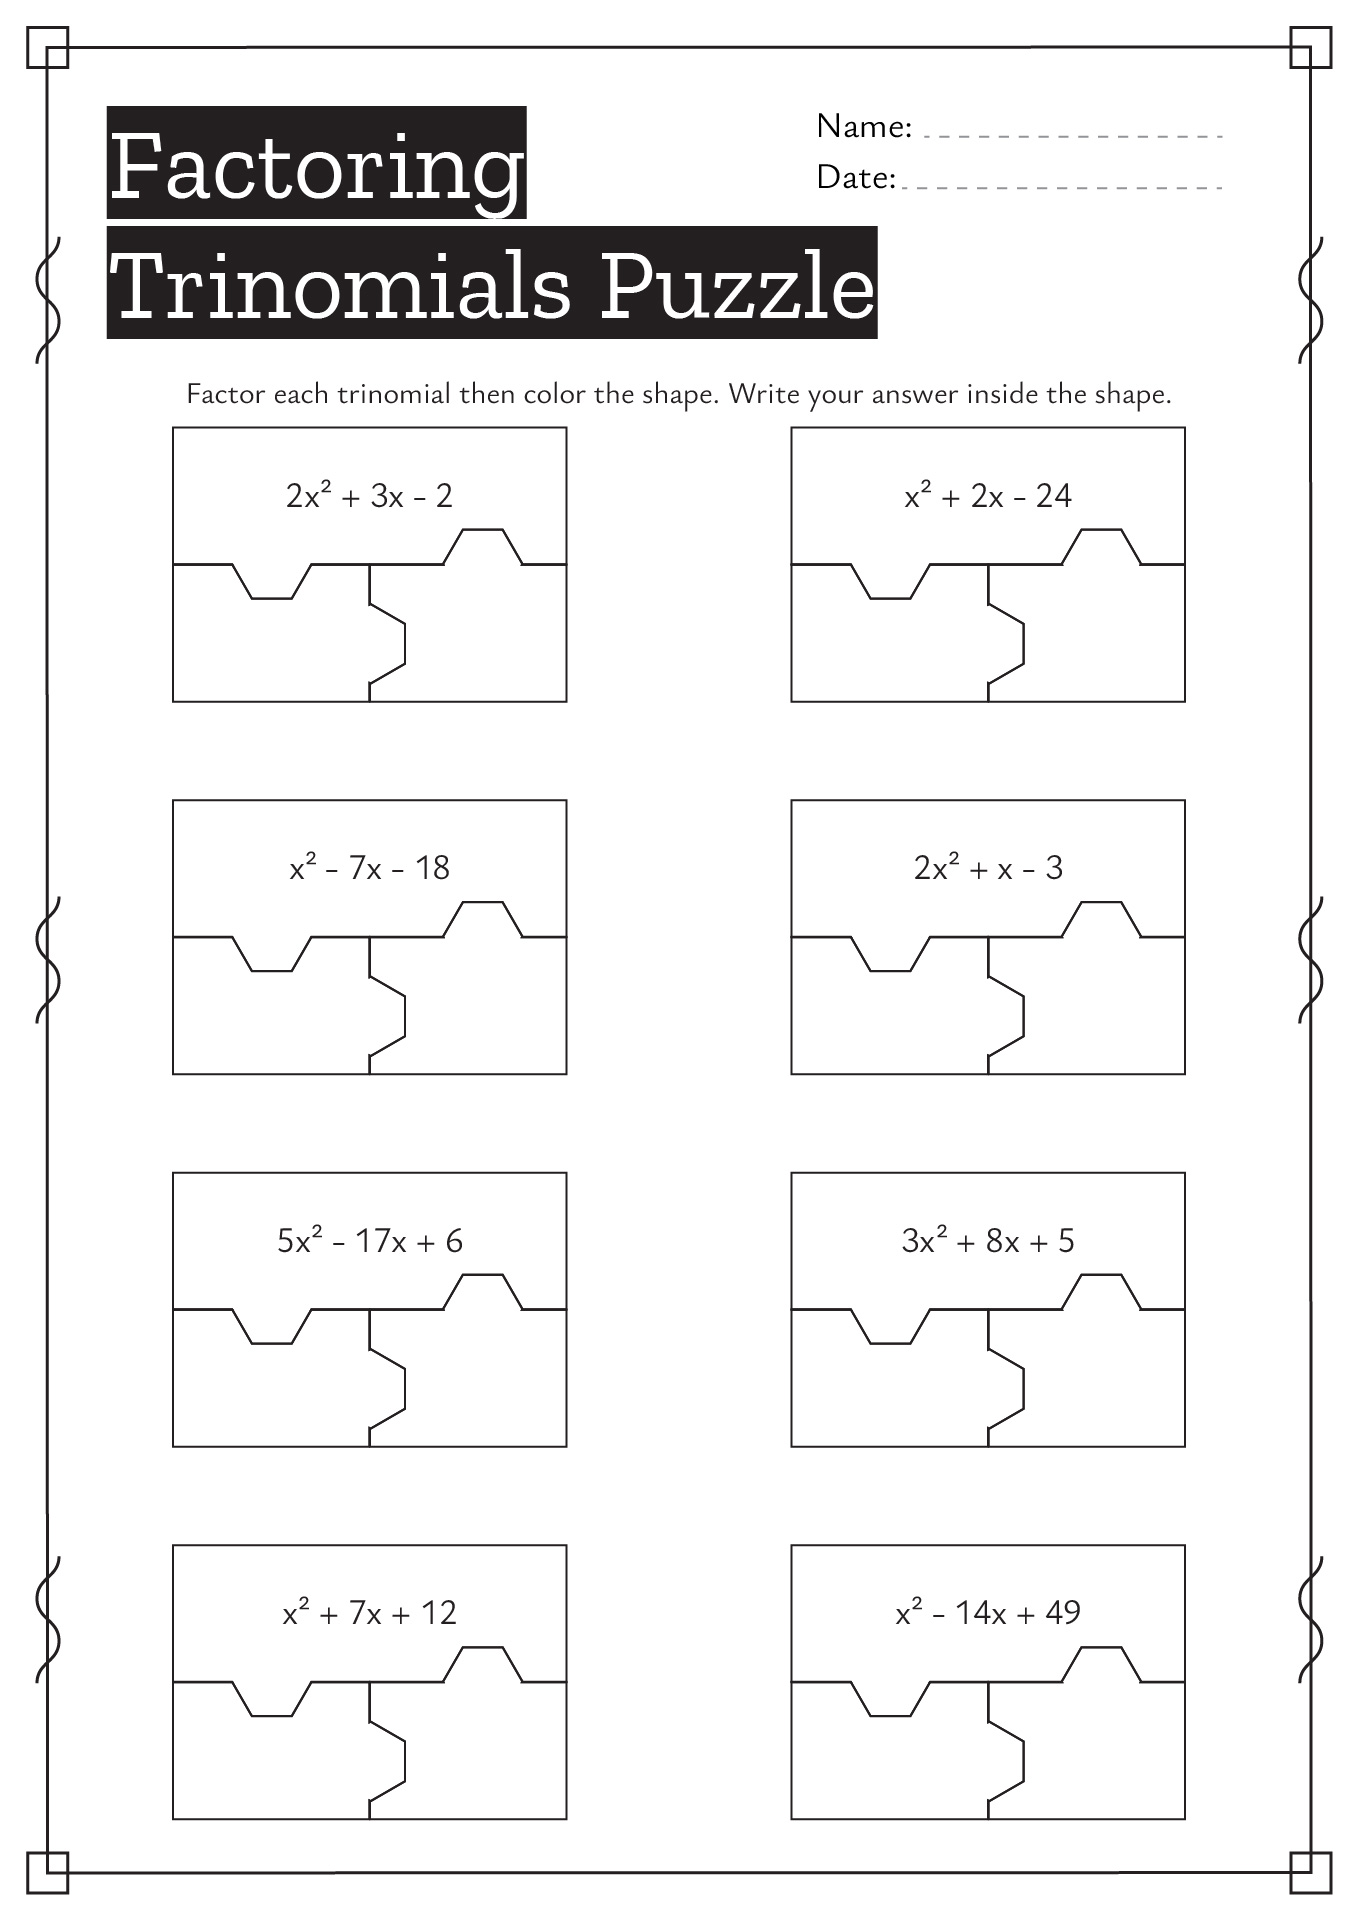 13 Best Images Of Algebra 1 Factoring Puzzle Worksheets Factoring Trinomials Worksheet